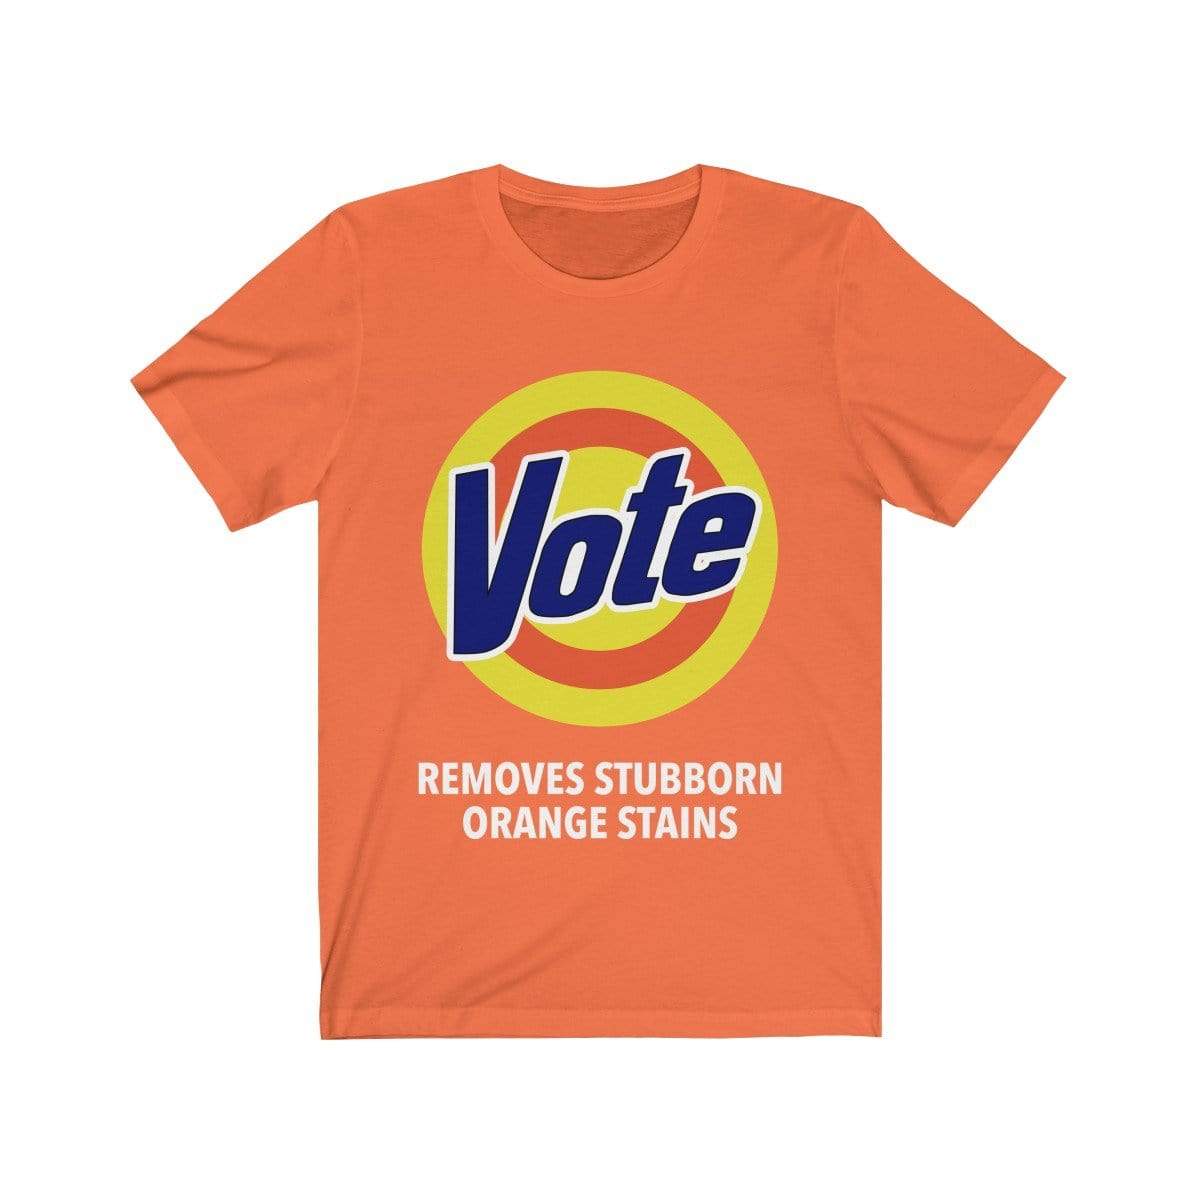 Printify T-Shirt Orange / S VOTE Tee